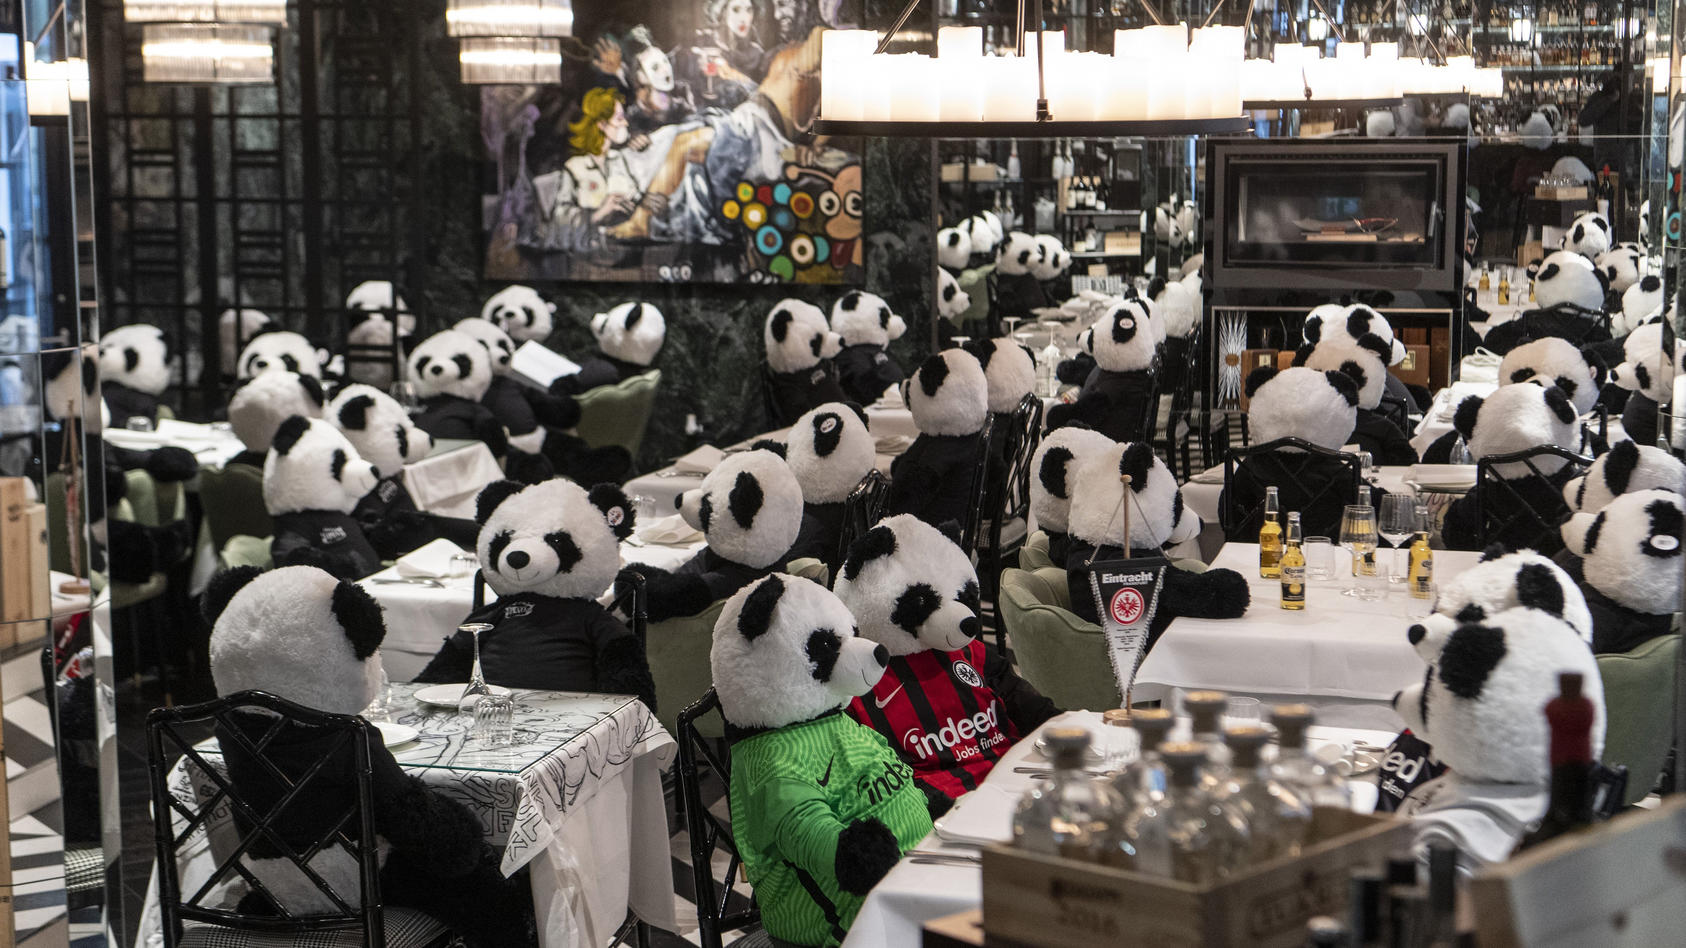 "Panda"mie statt Pandemie: Frankfurter Restaurant nimmt ...